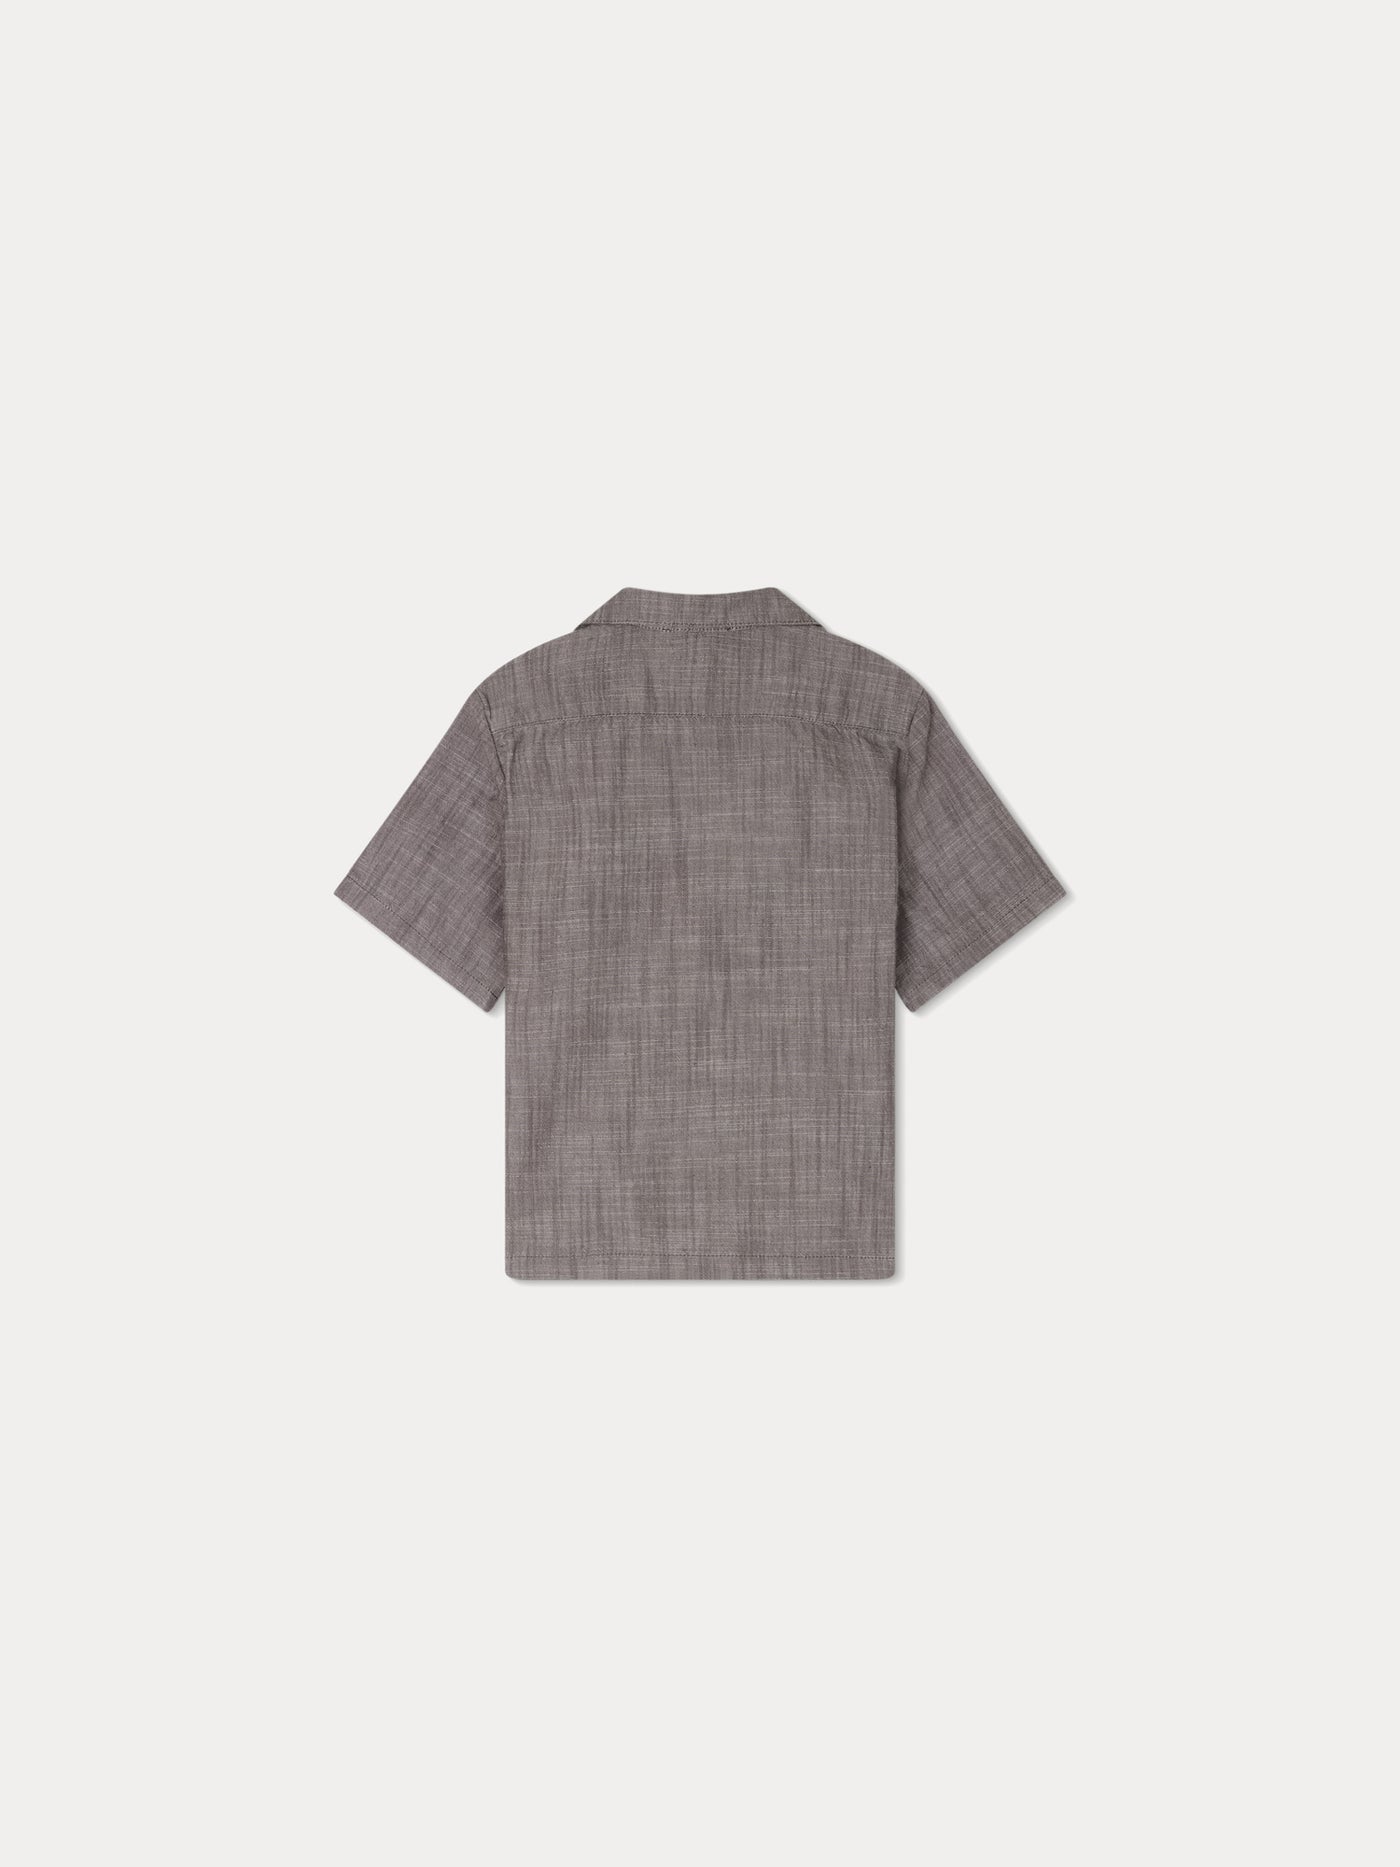 Fabri Shirt slate gray